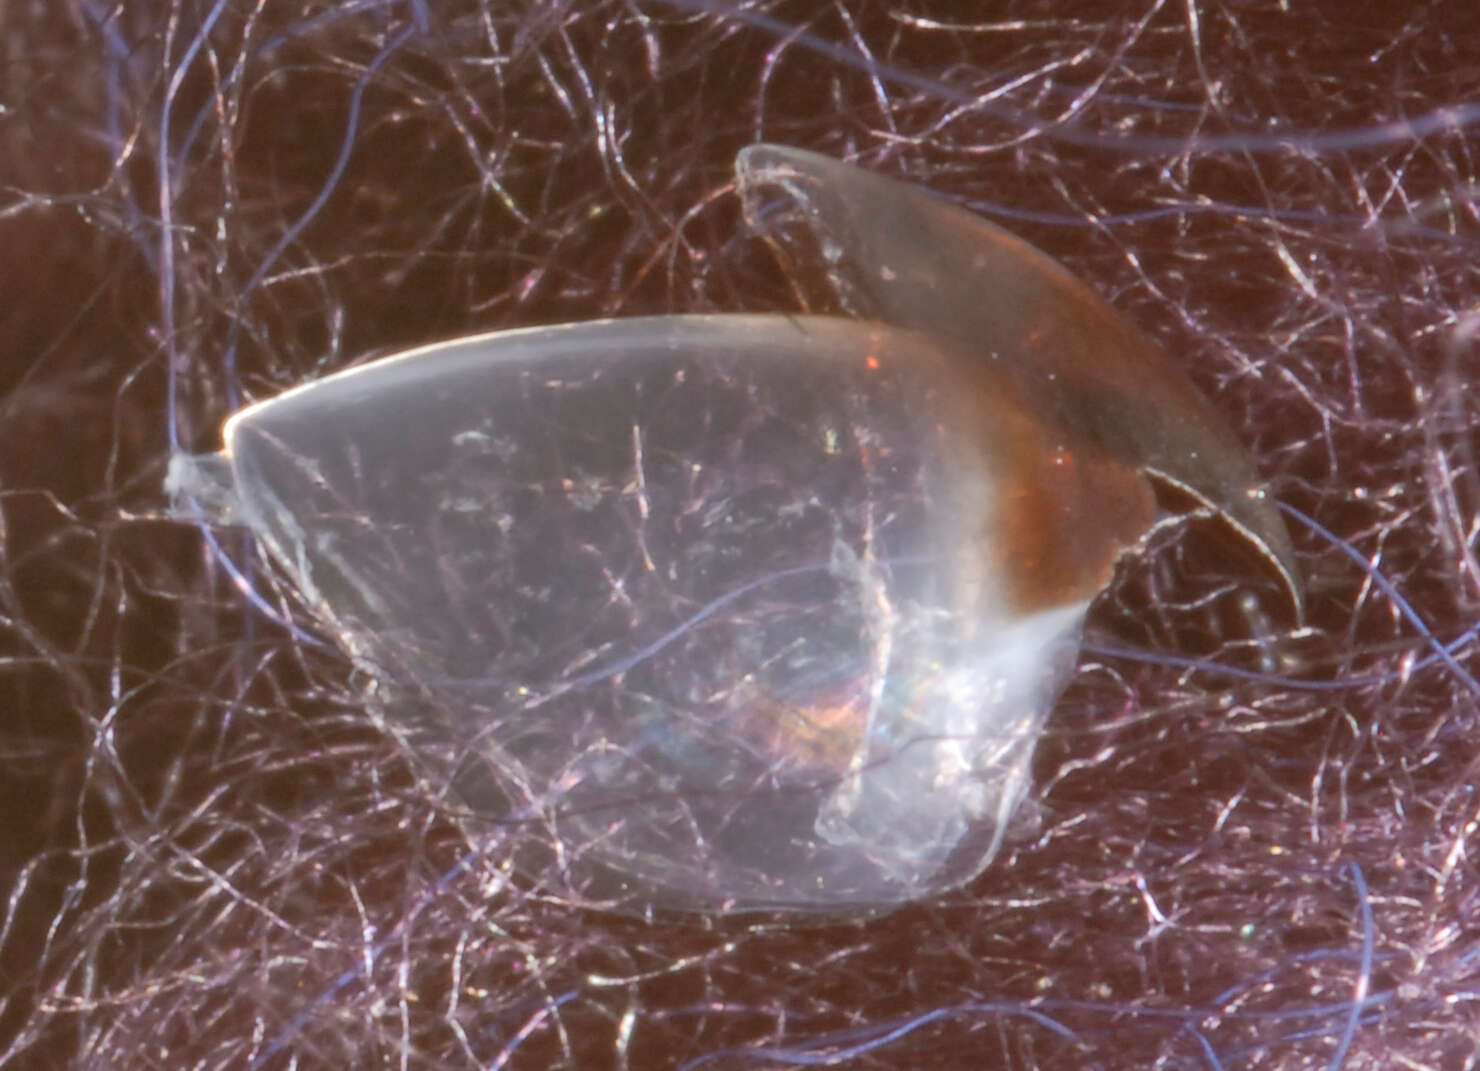 Image of Wonderful firefly squid